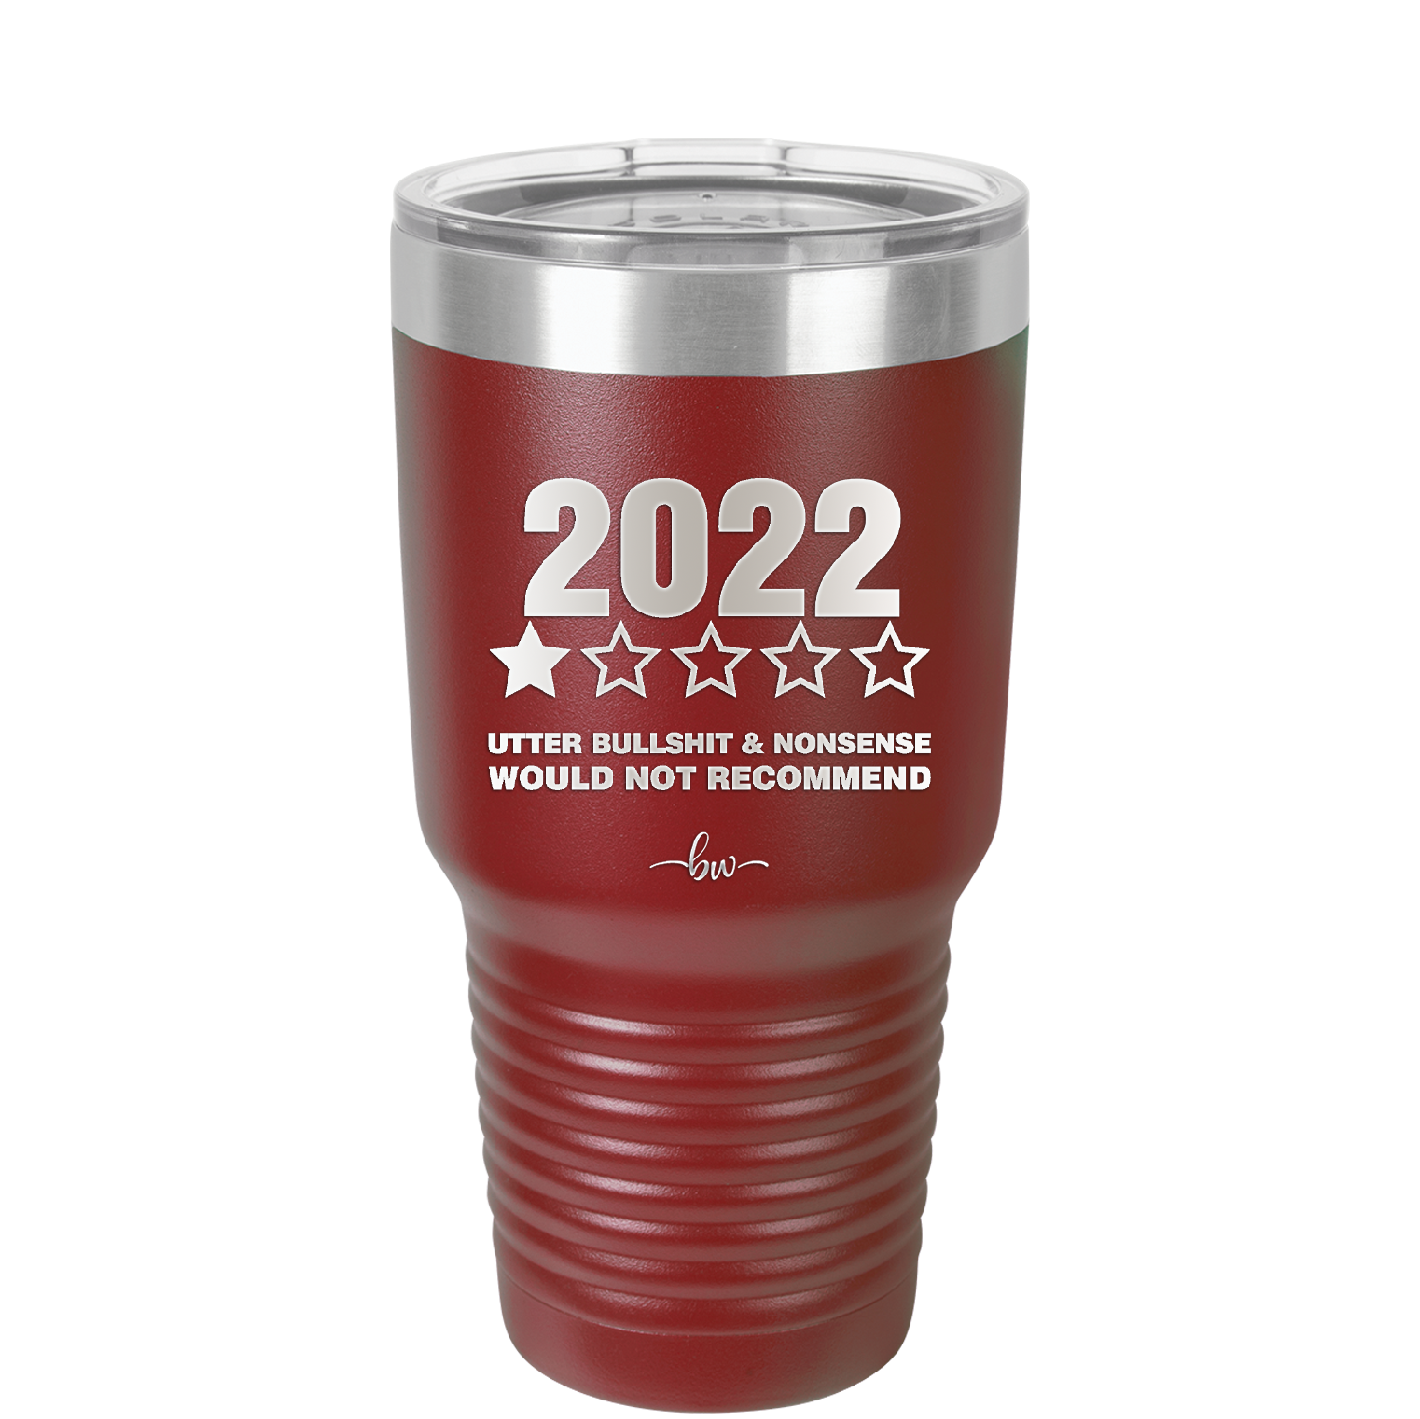 30 oz 2022 utter bullshitt and nonsense would not recommend- maroon